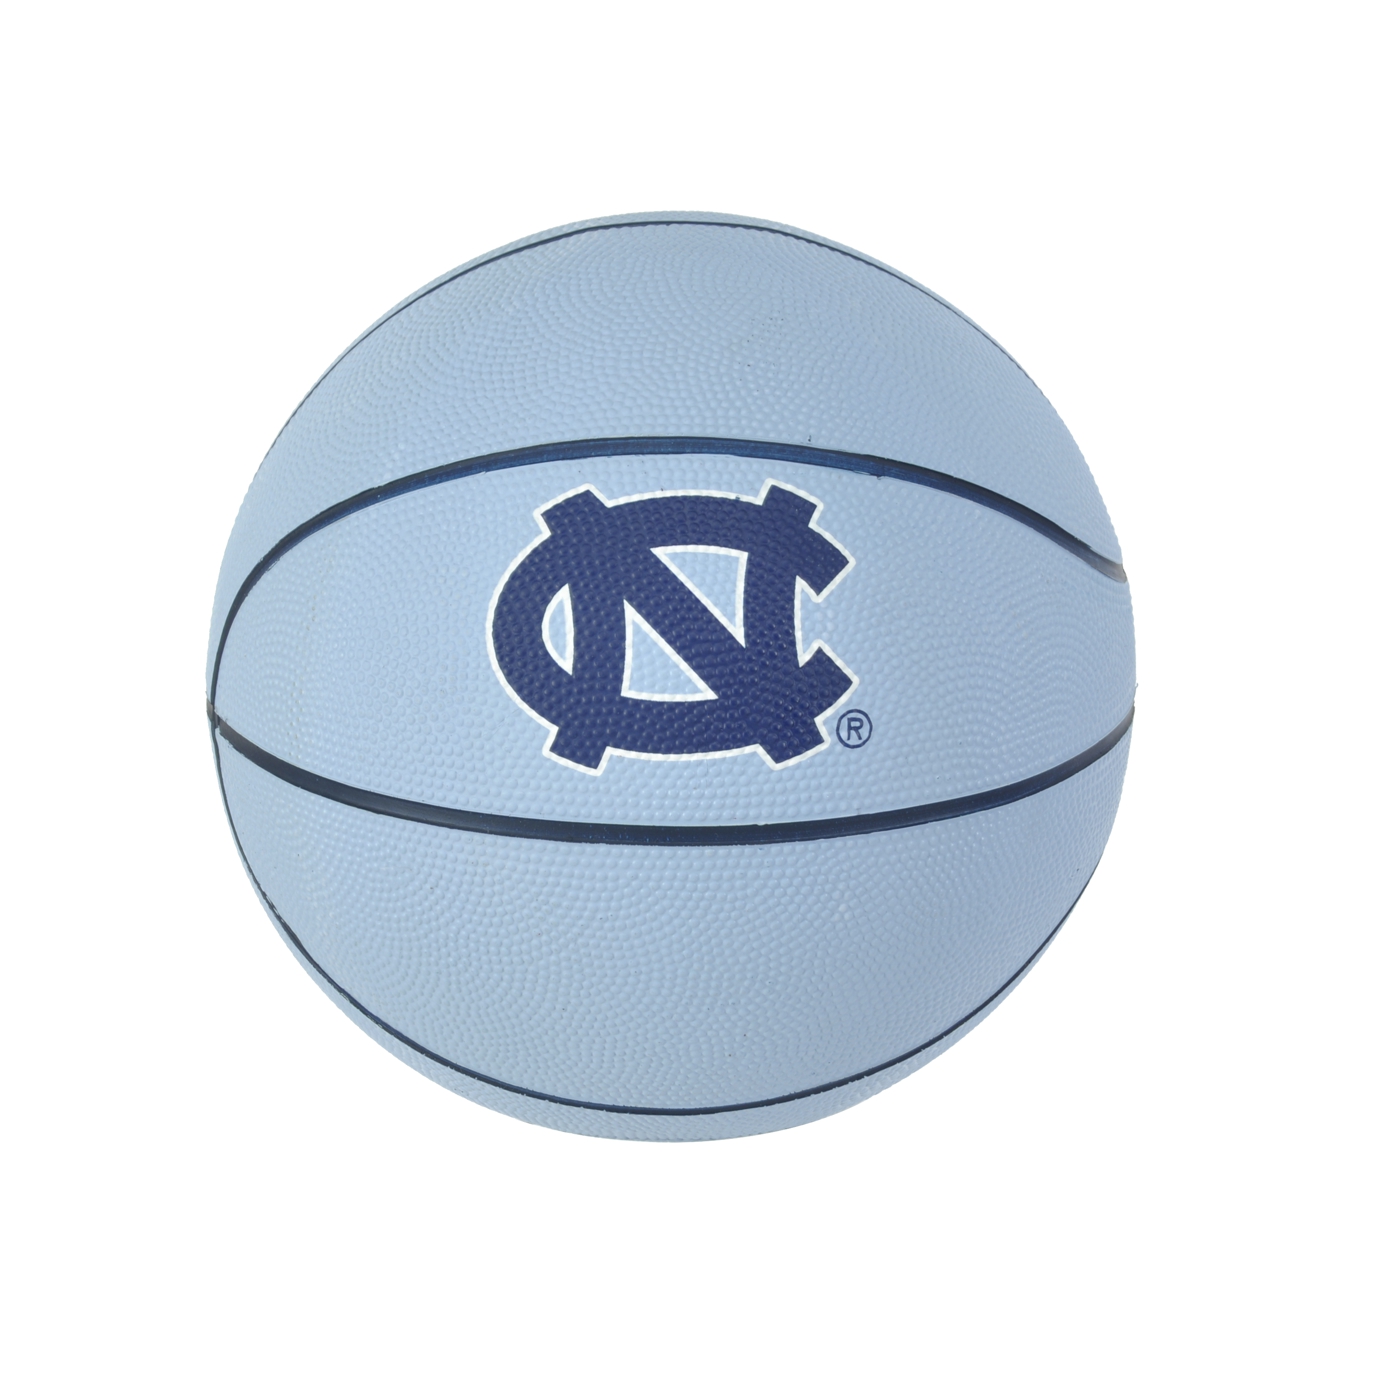 North Carolina Tar Heels Mini Rubber Basketball 